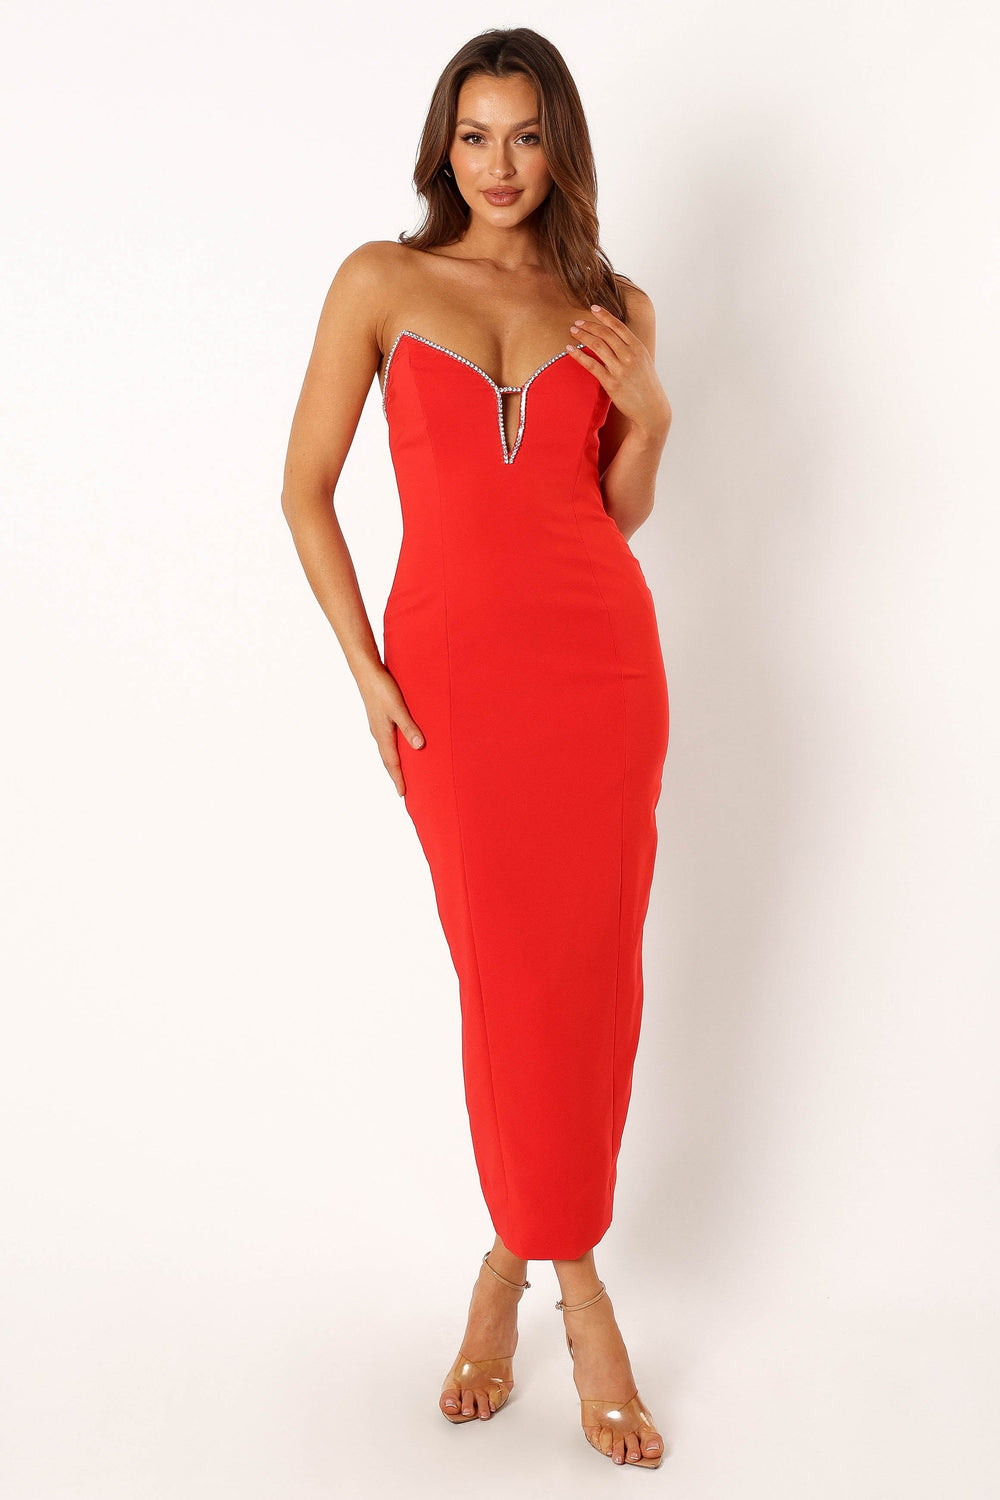 Shop Formal Dress - Bec Midi Dress - Red fourth image